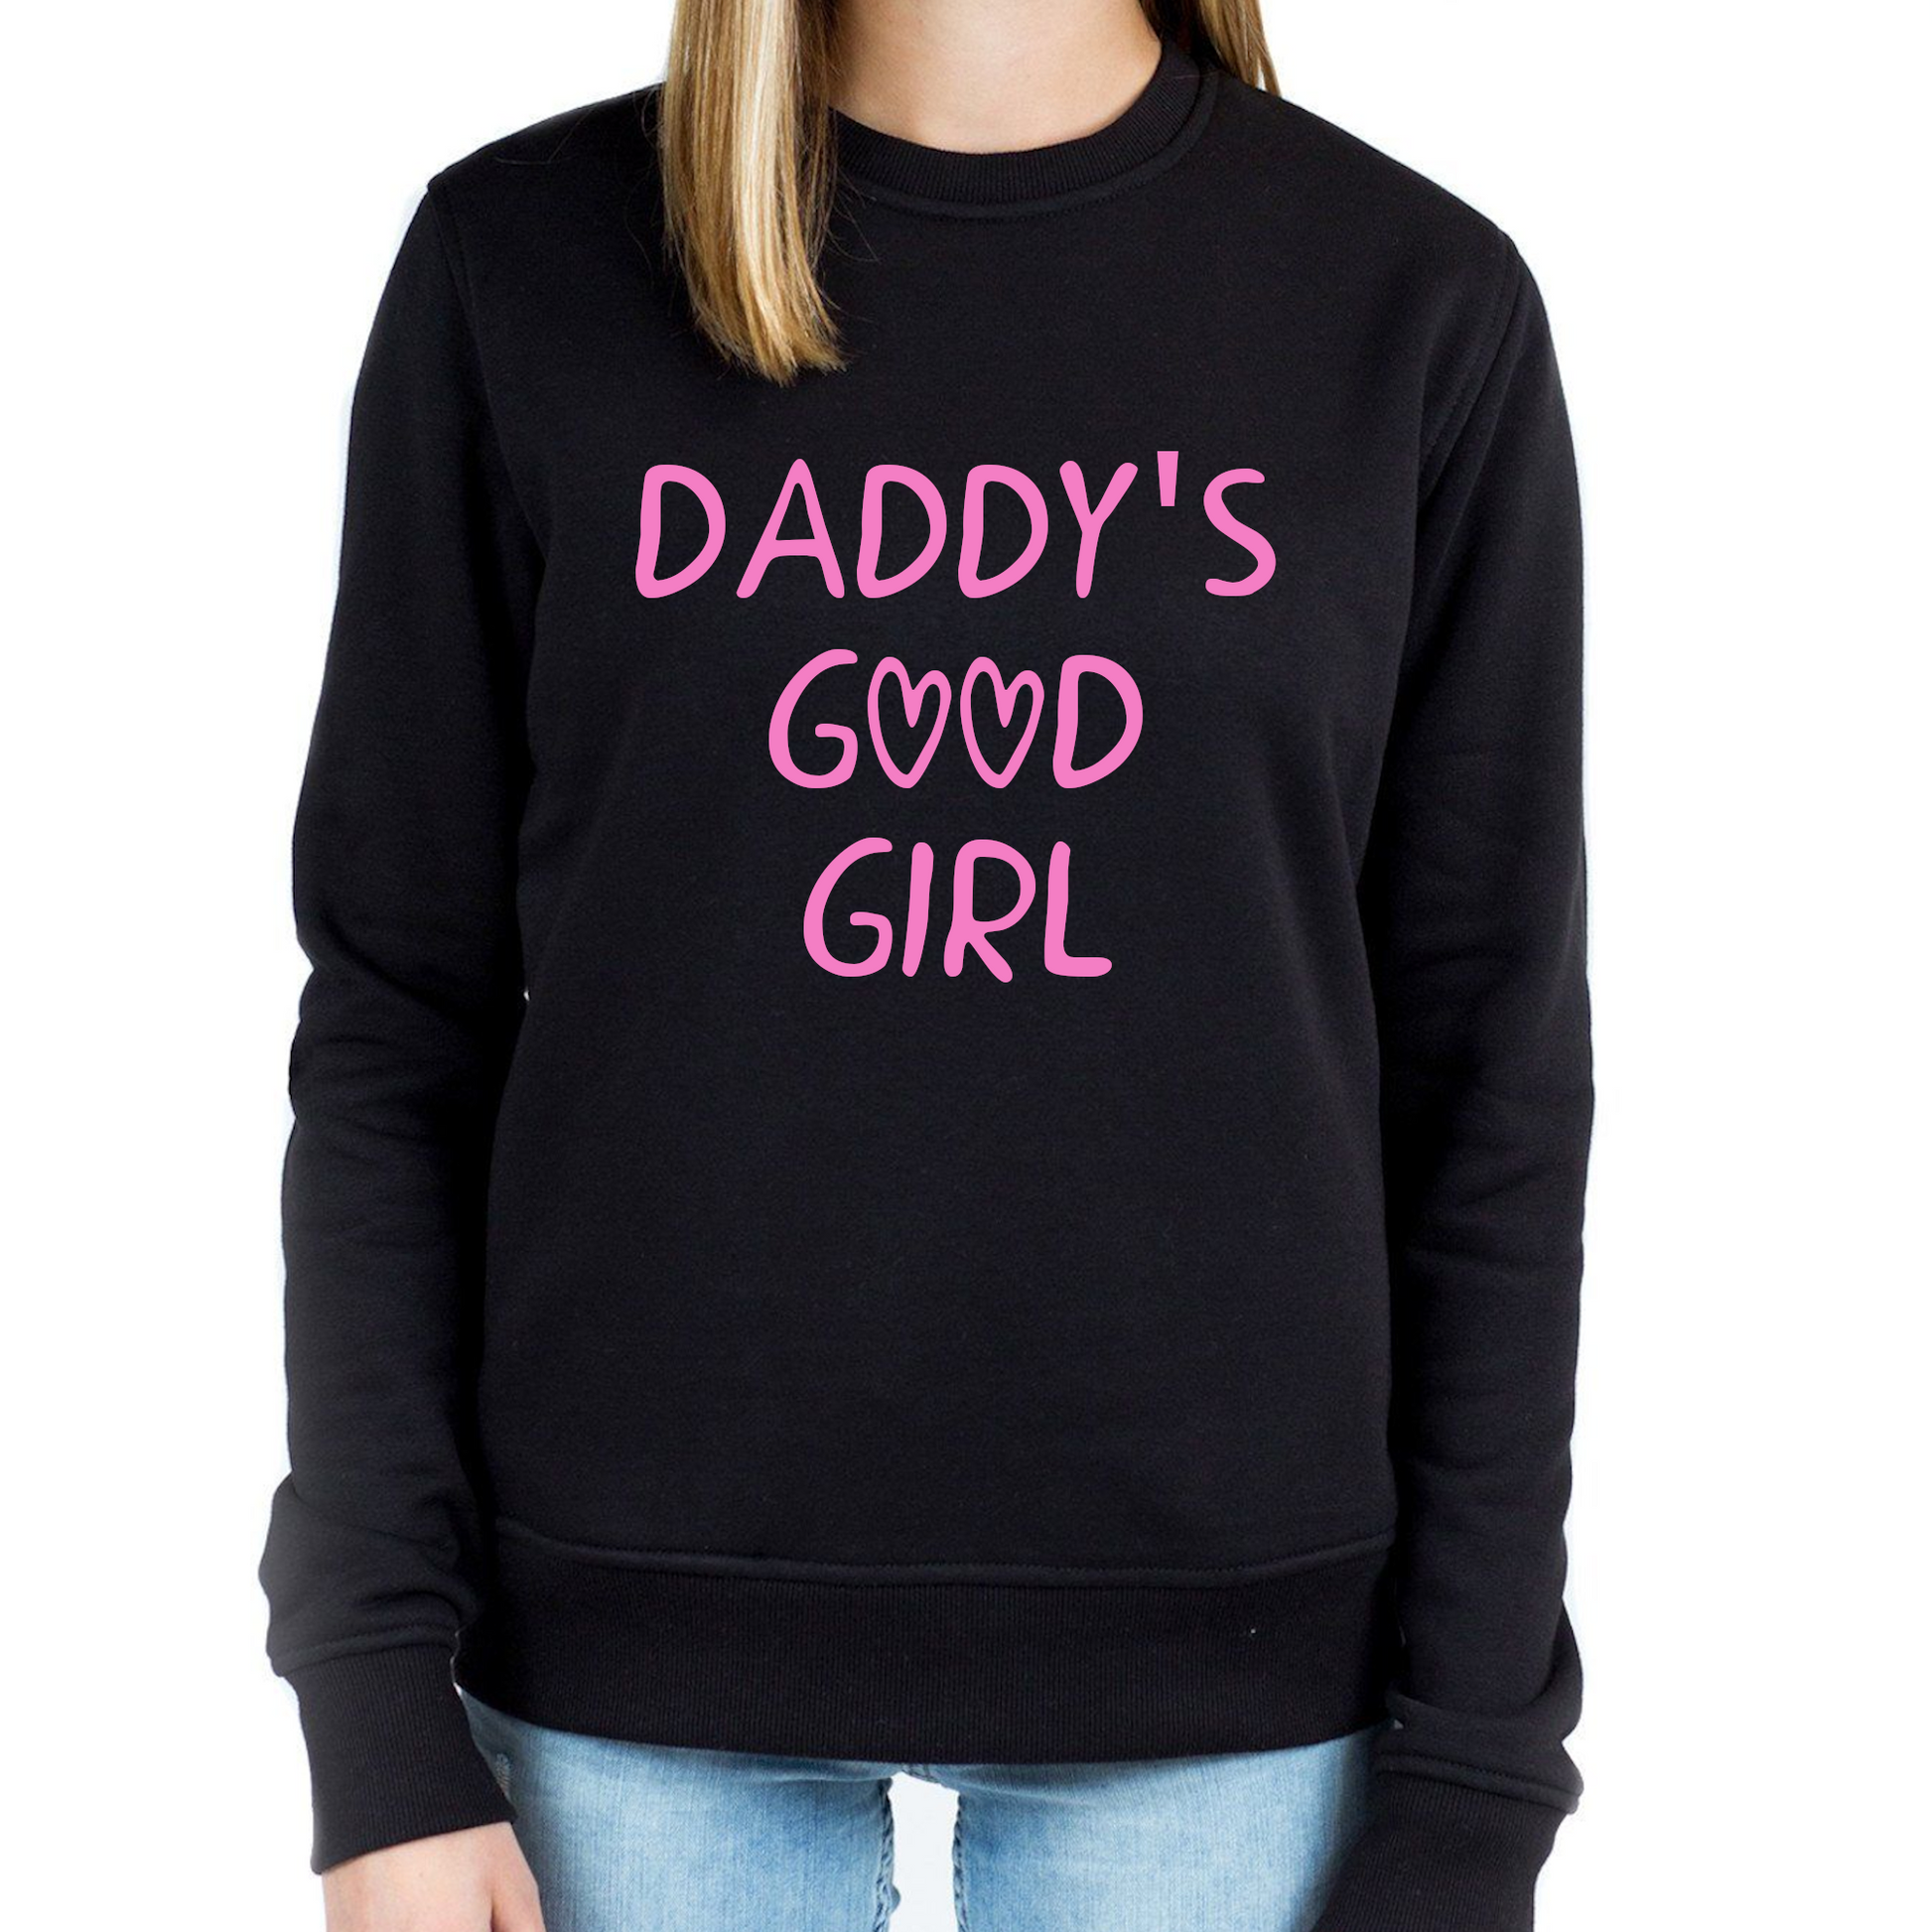 Daddys Good Girl Sweater